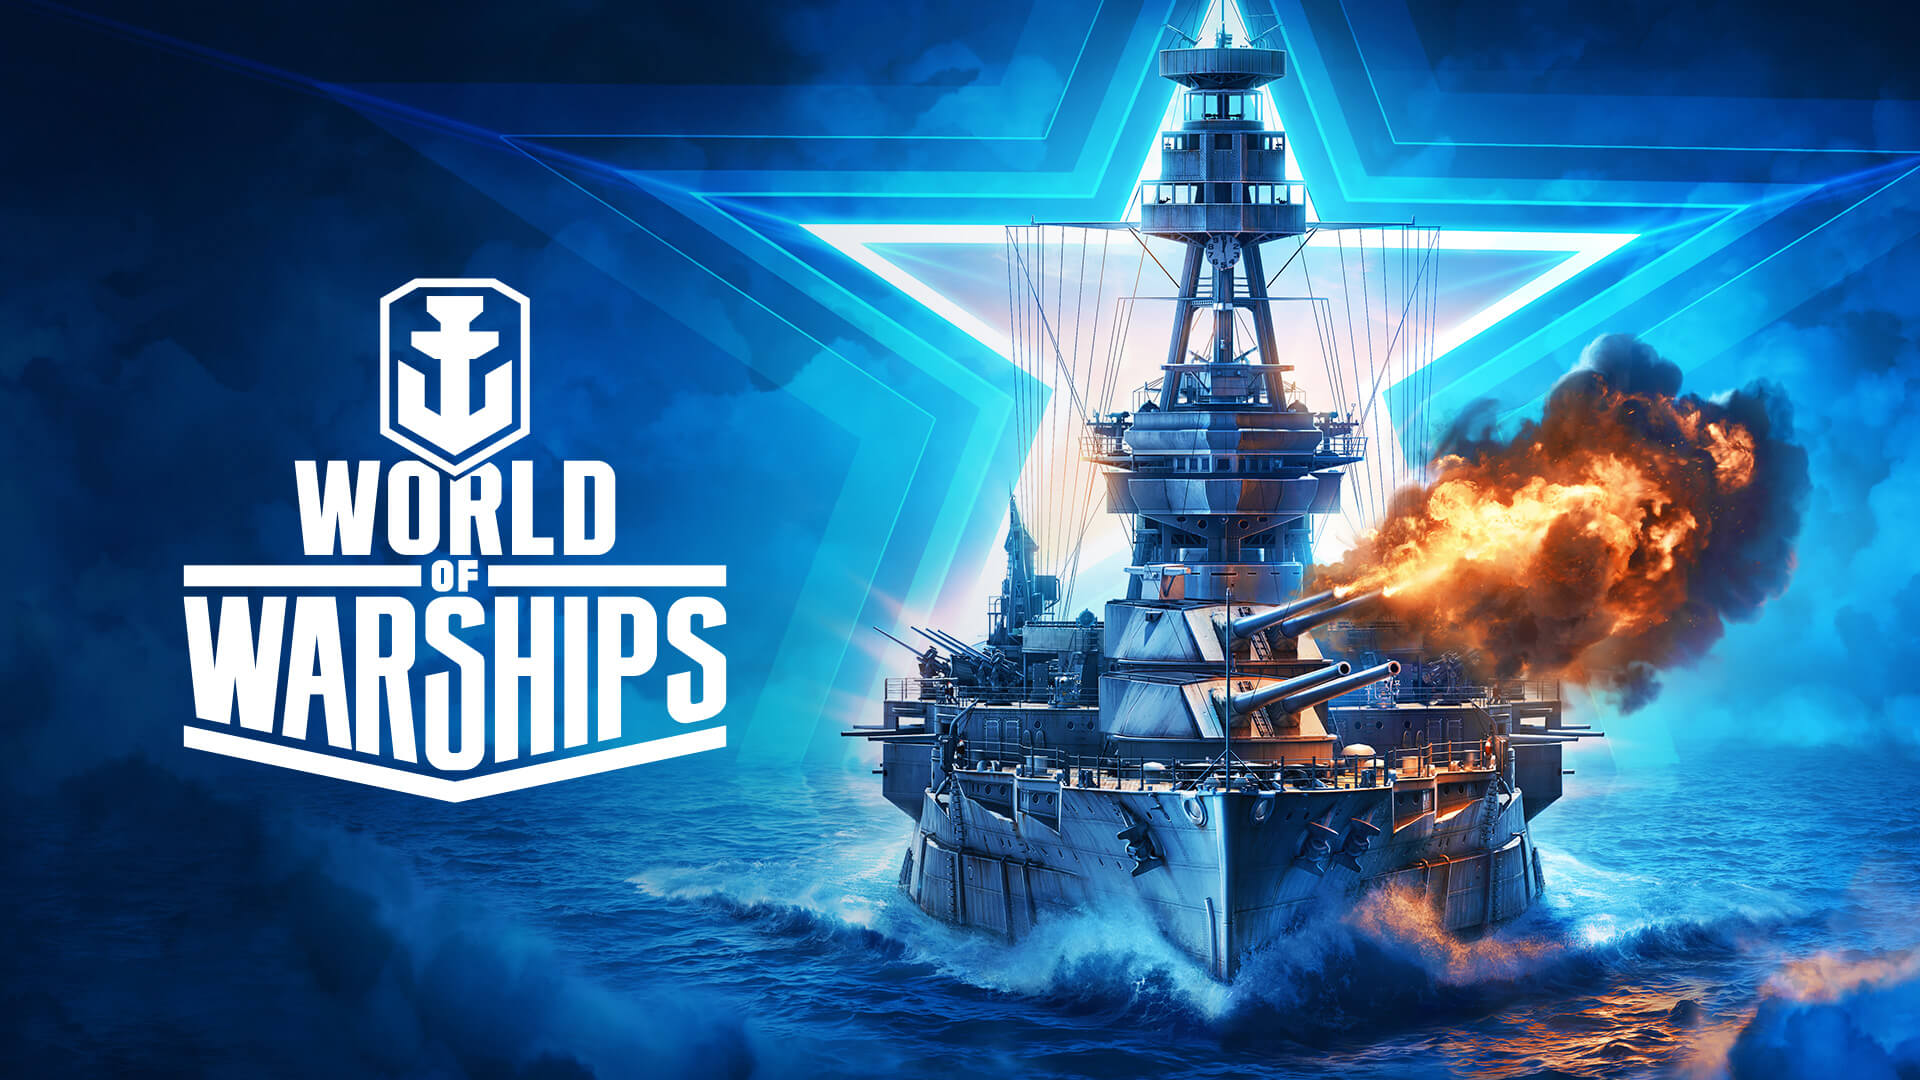 egs worldofwarships wargaminggrouplimited g1c 00 1920x1080 7abaedc5acd0 Download World Of Warships for PC